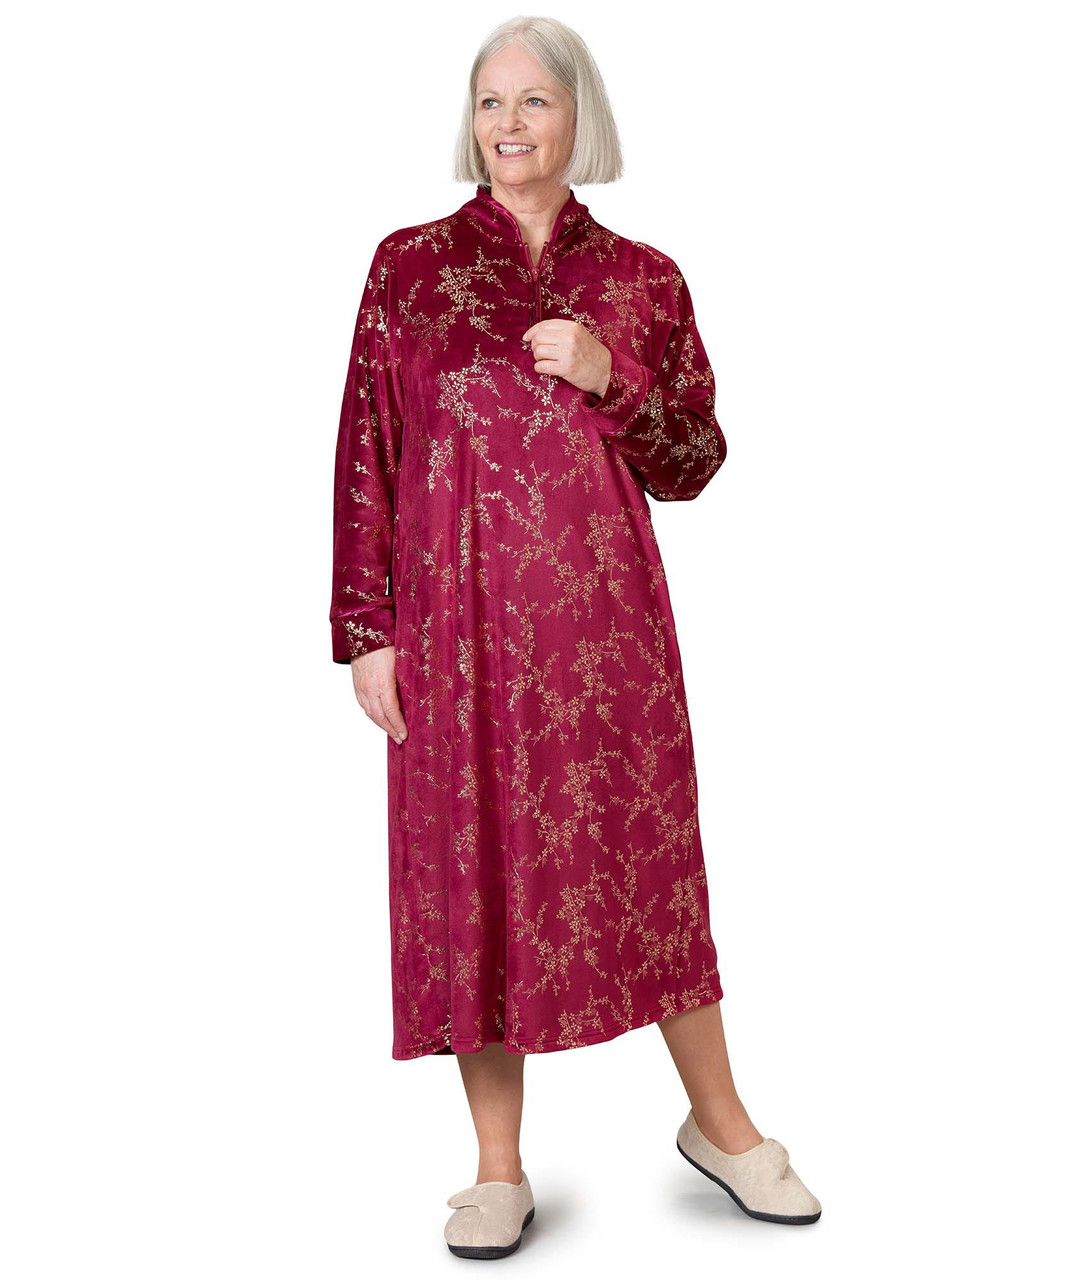 Silverts SV26400 Women's Open Back Plush Loungewear Nightgown Wine Floral, Size=M, SV26400-SV1445-M